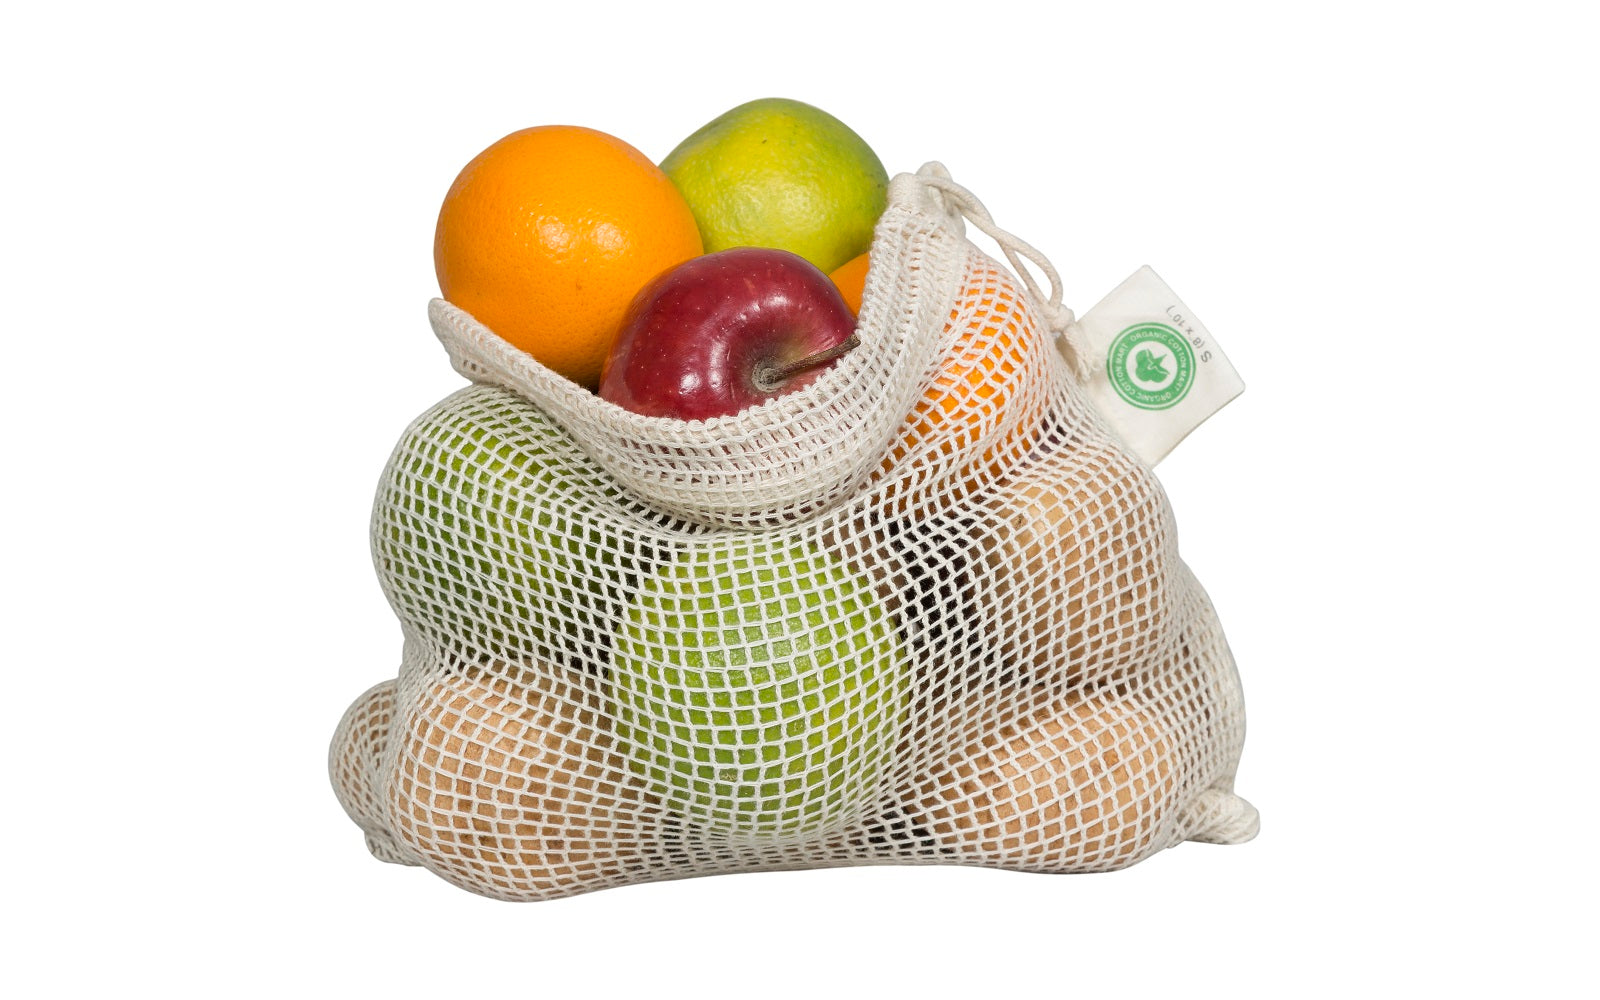 washable cotton mesh produce bags